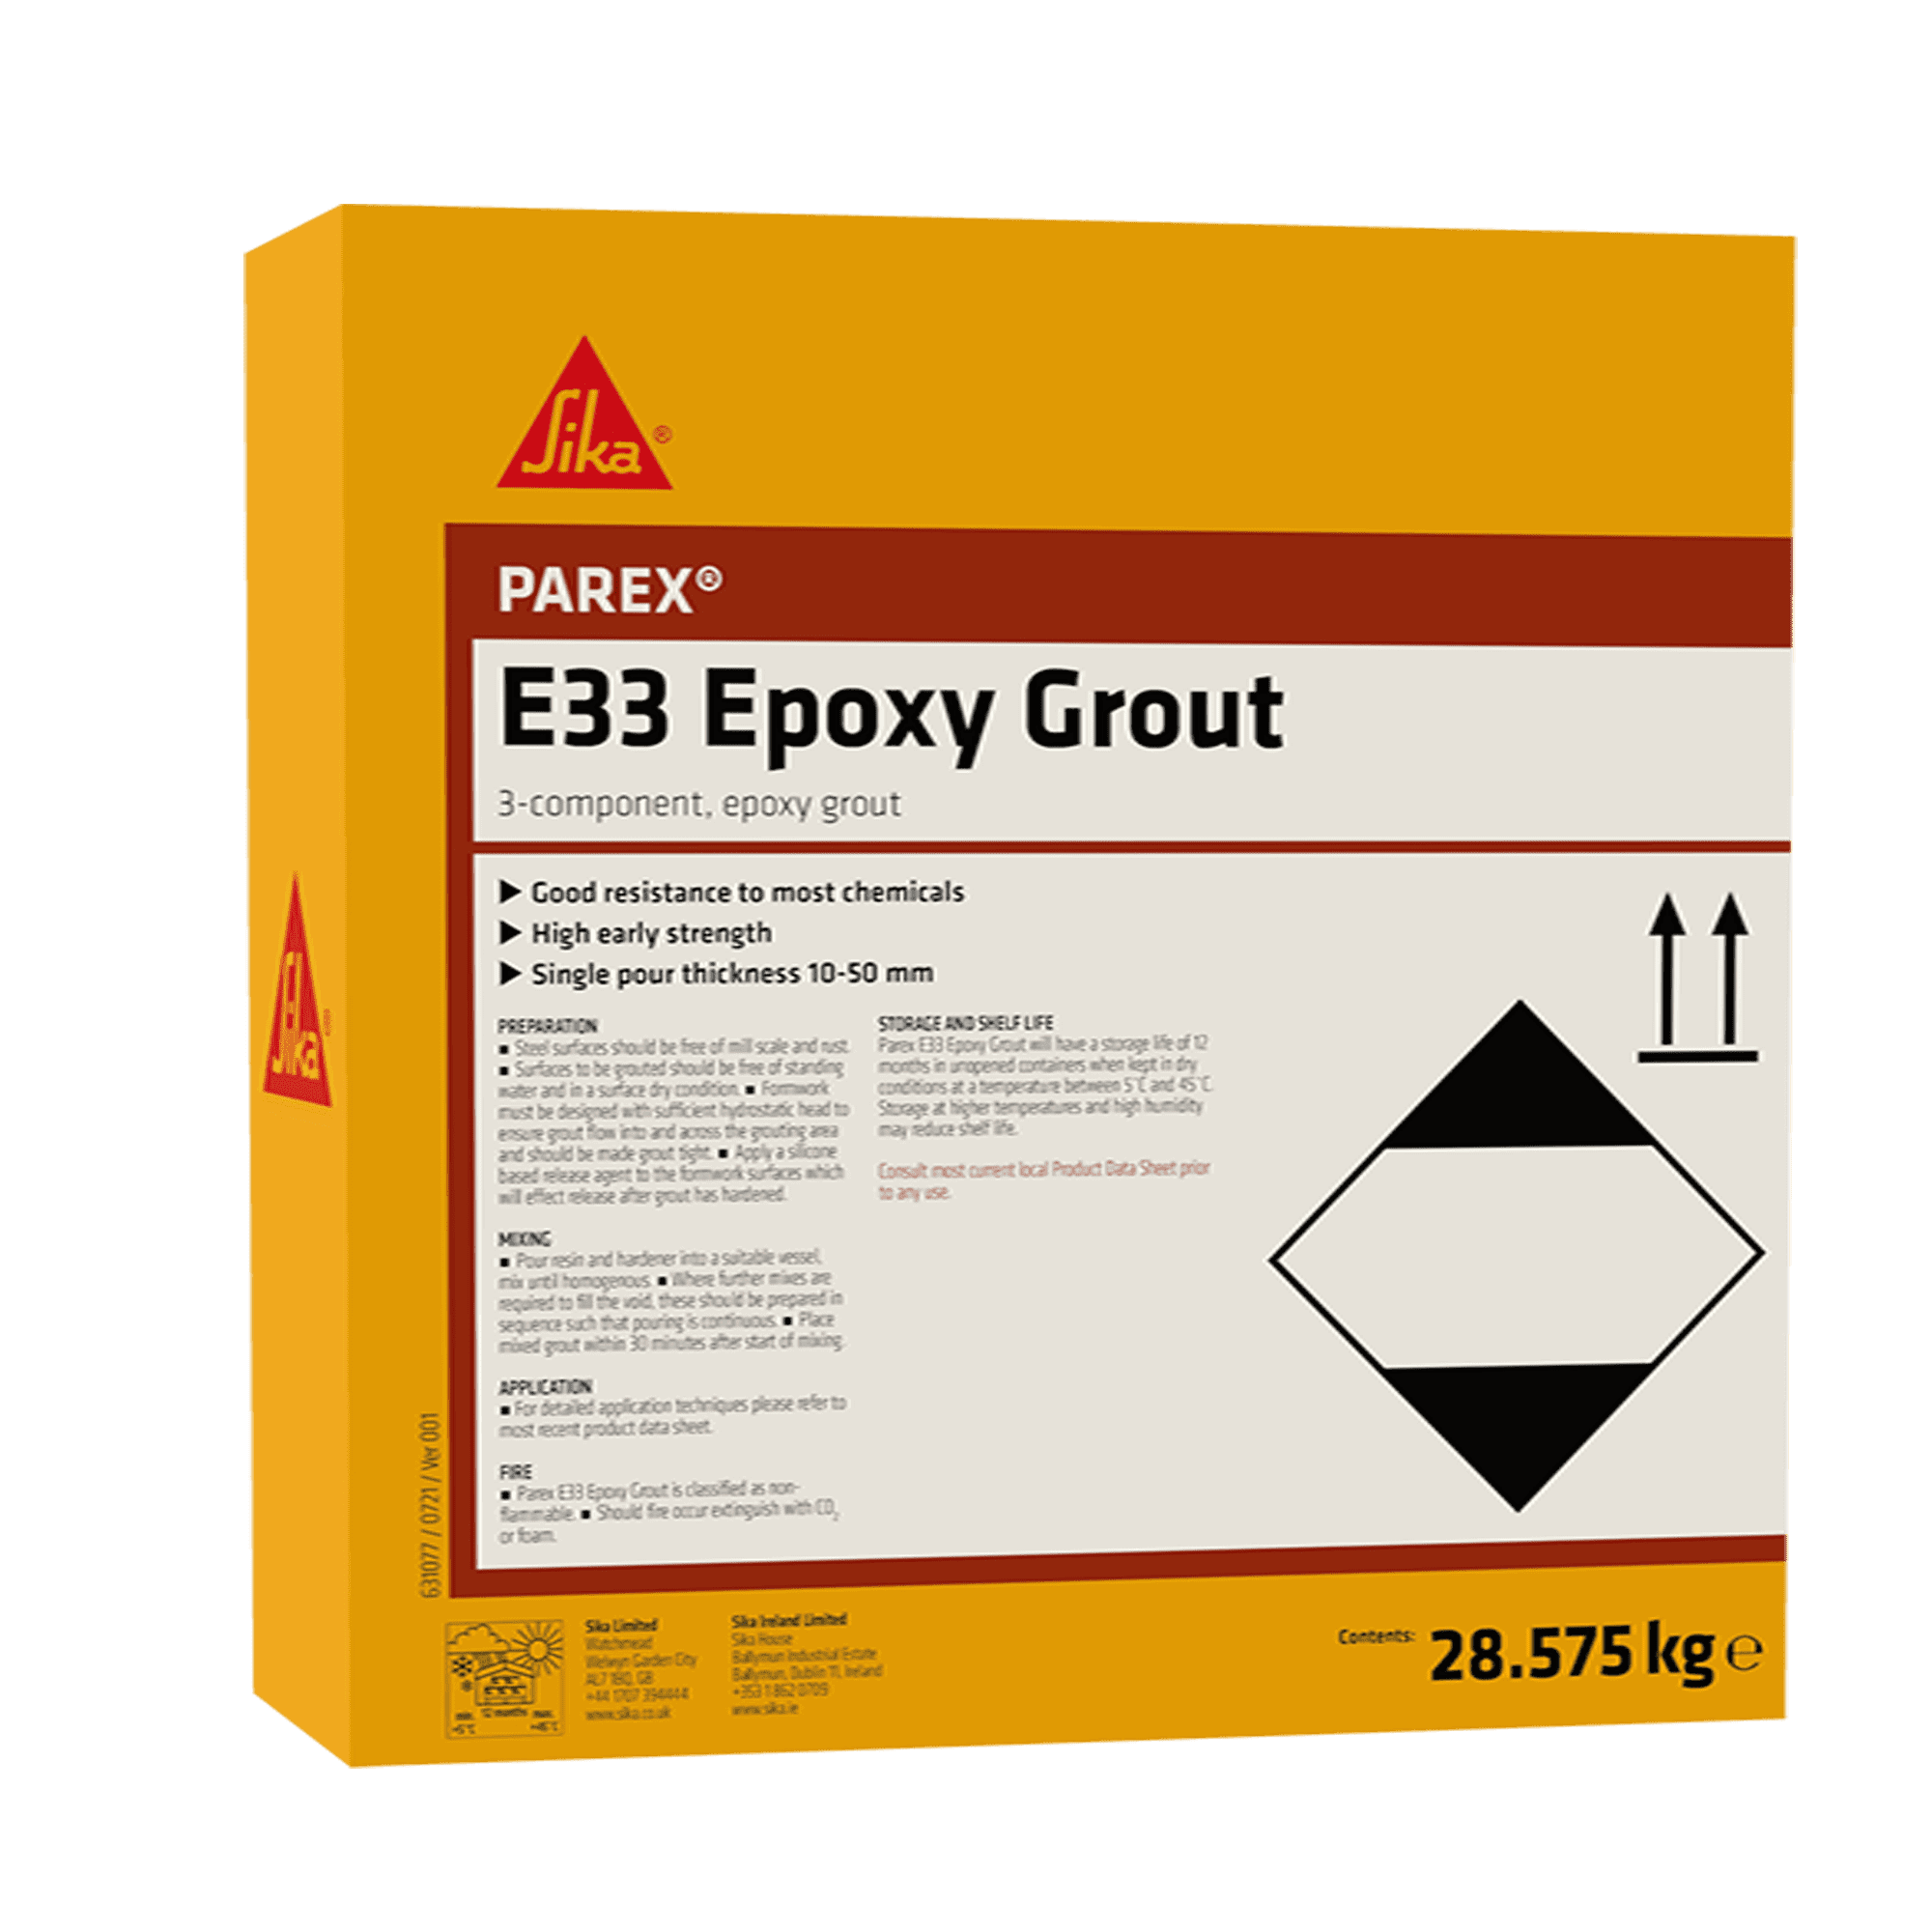 Parex E33 Epoxy Grout